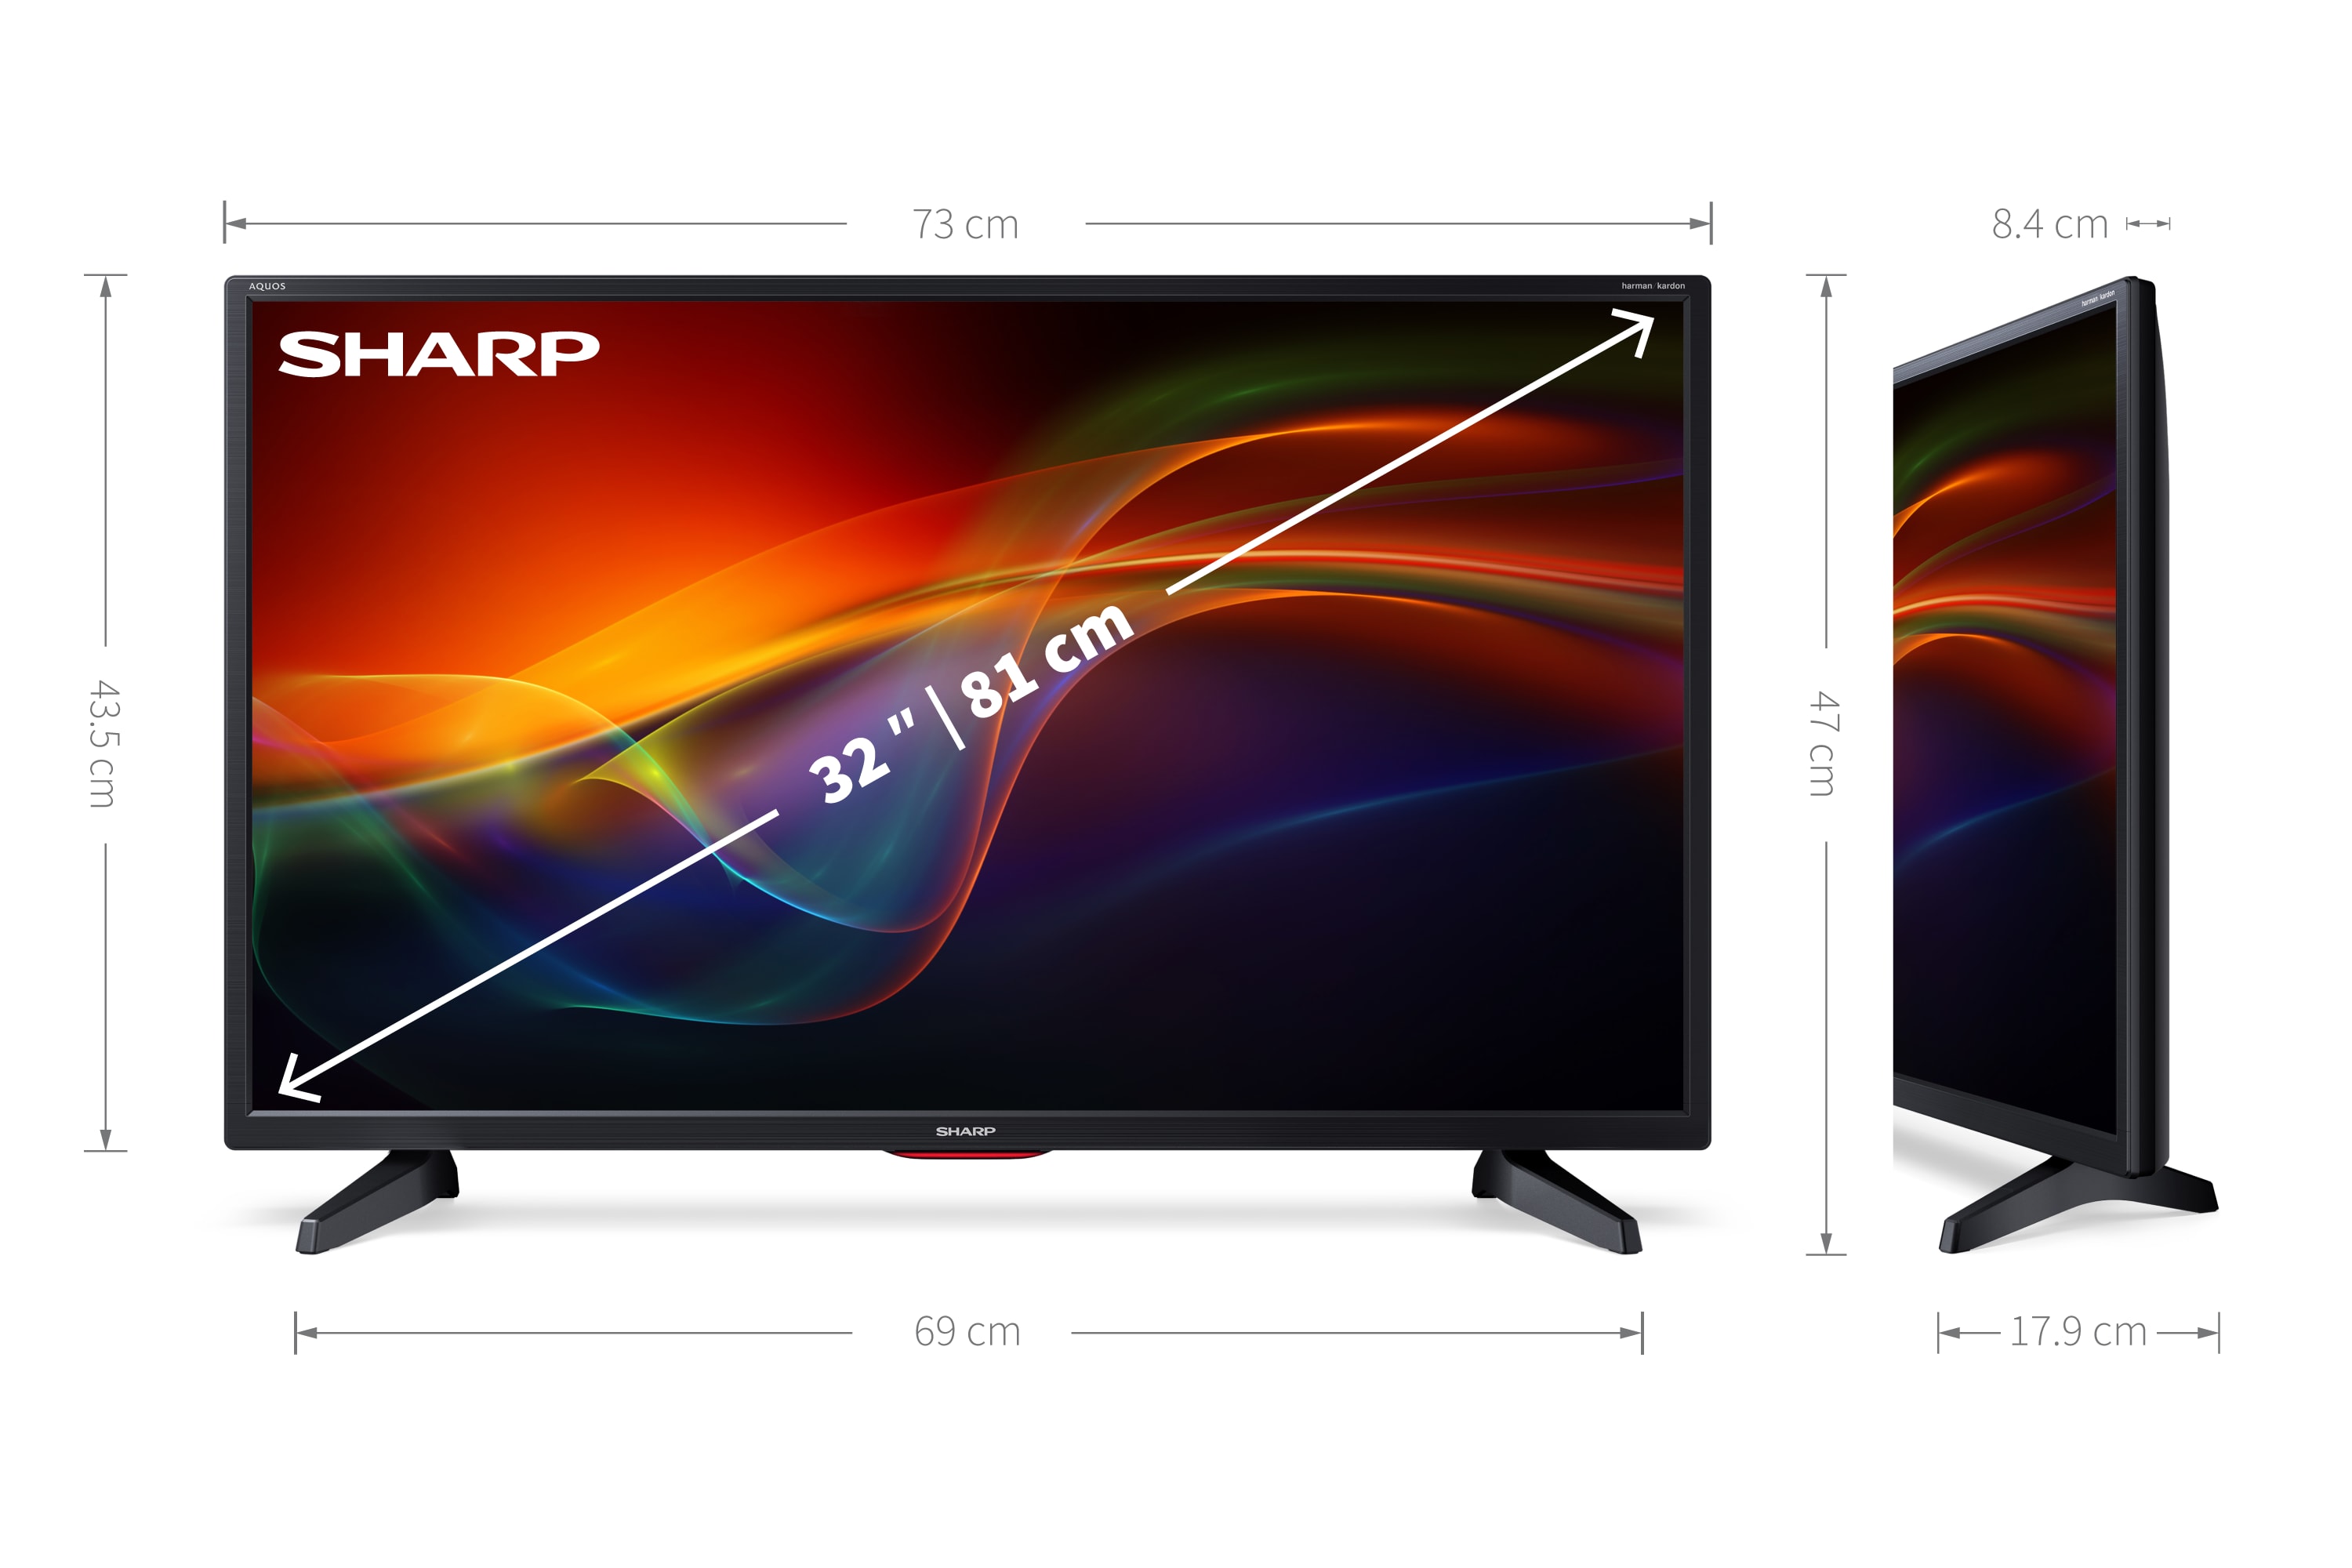 Non-Smart TV HD/Full HD - 32" HD READY TV